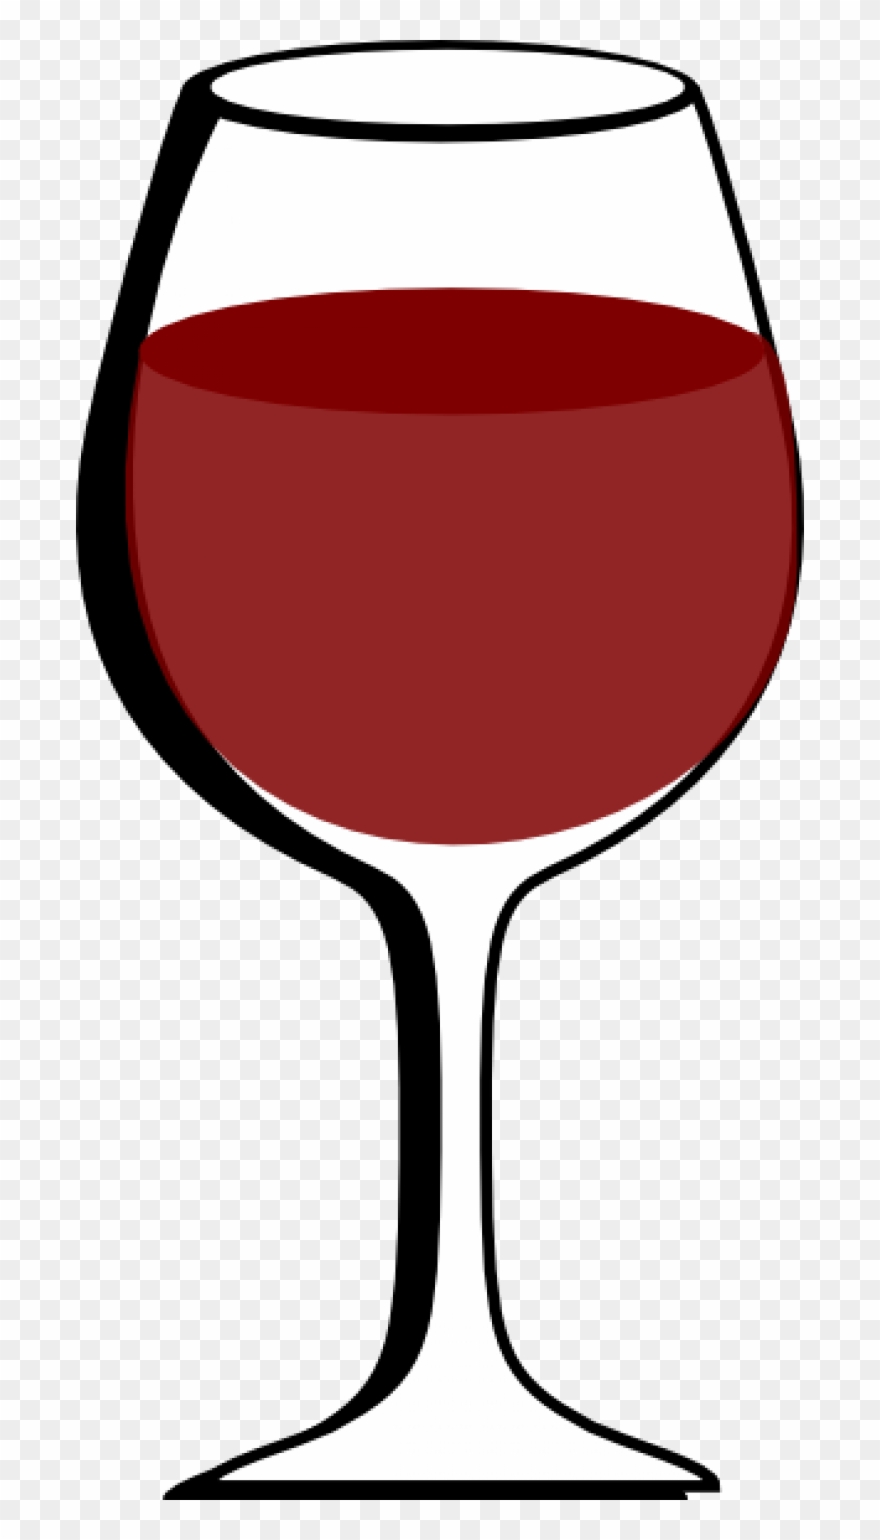 Wine clip art.